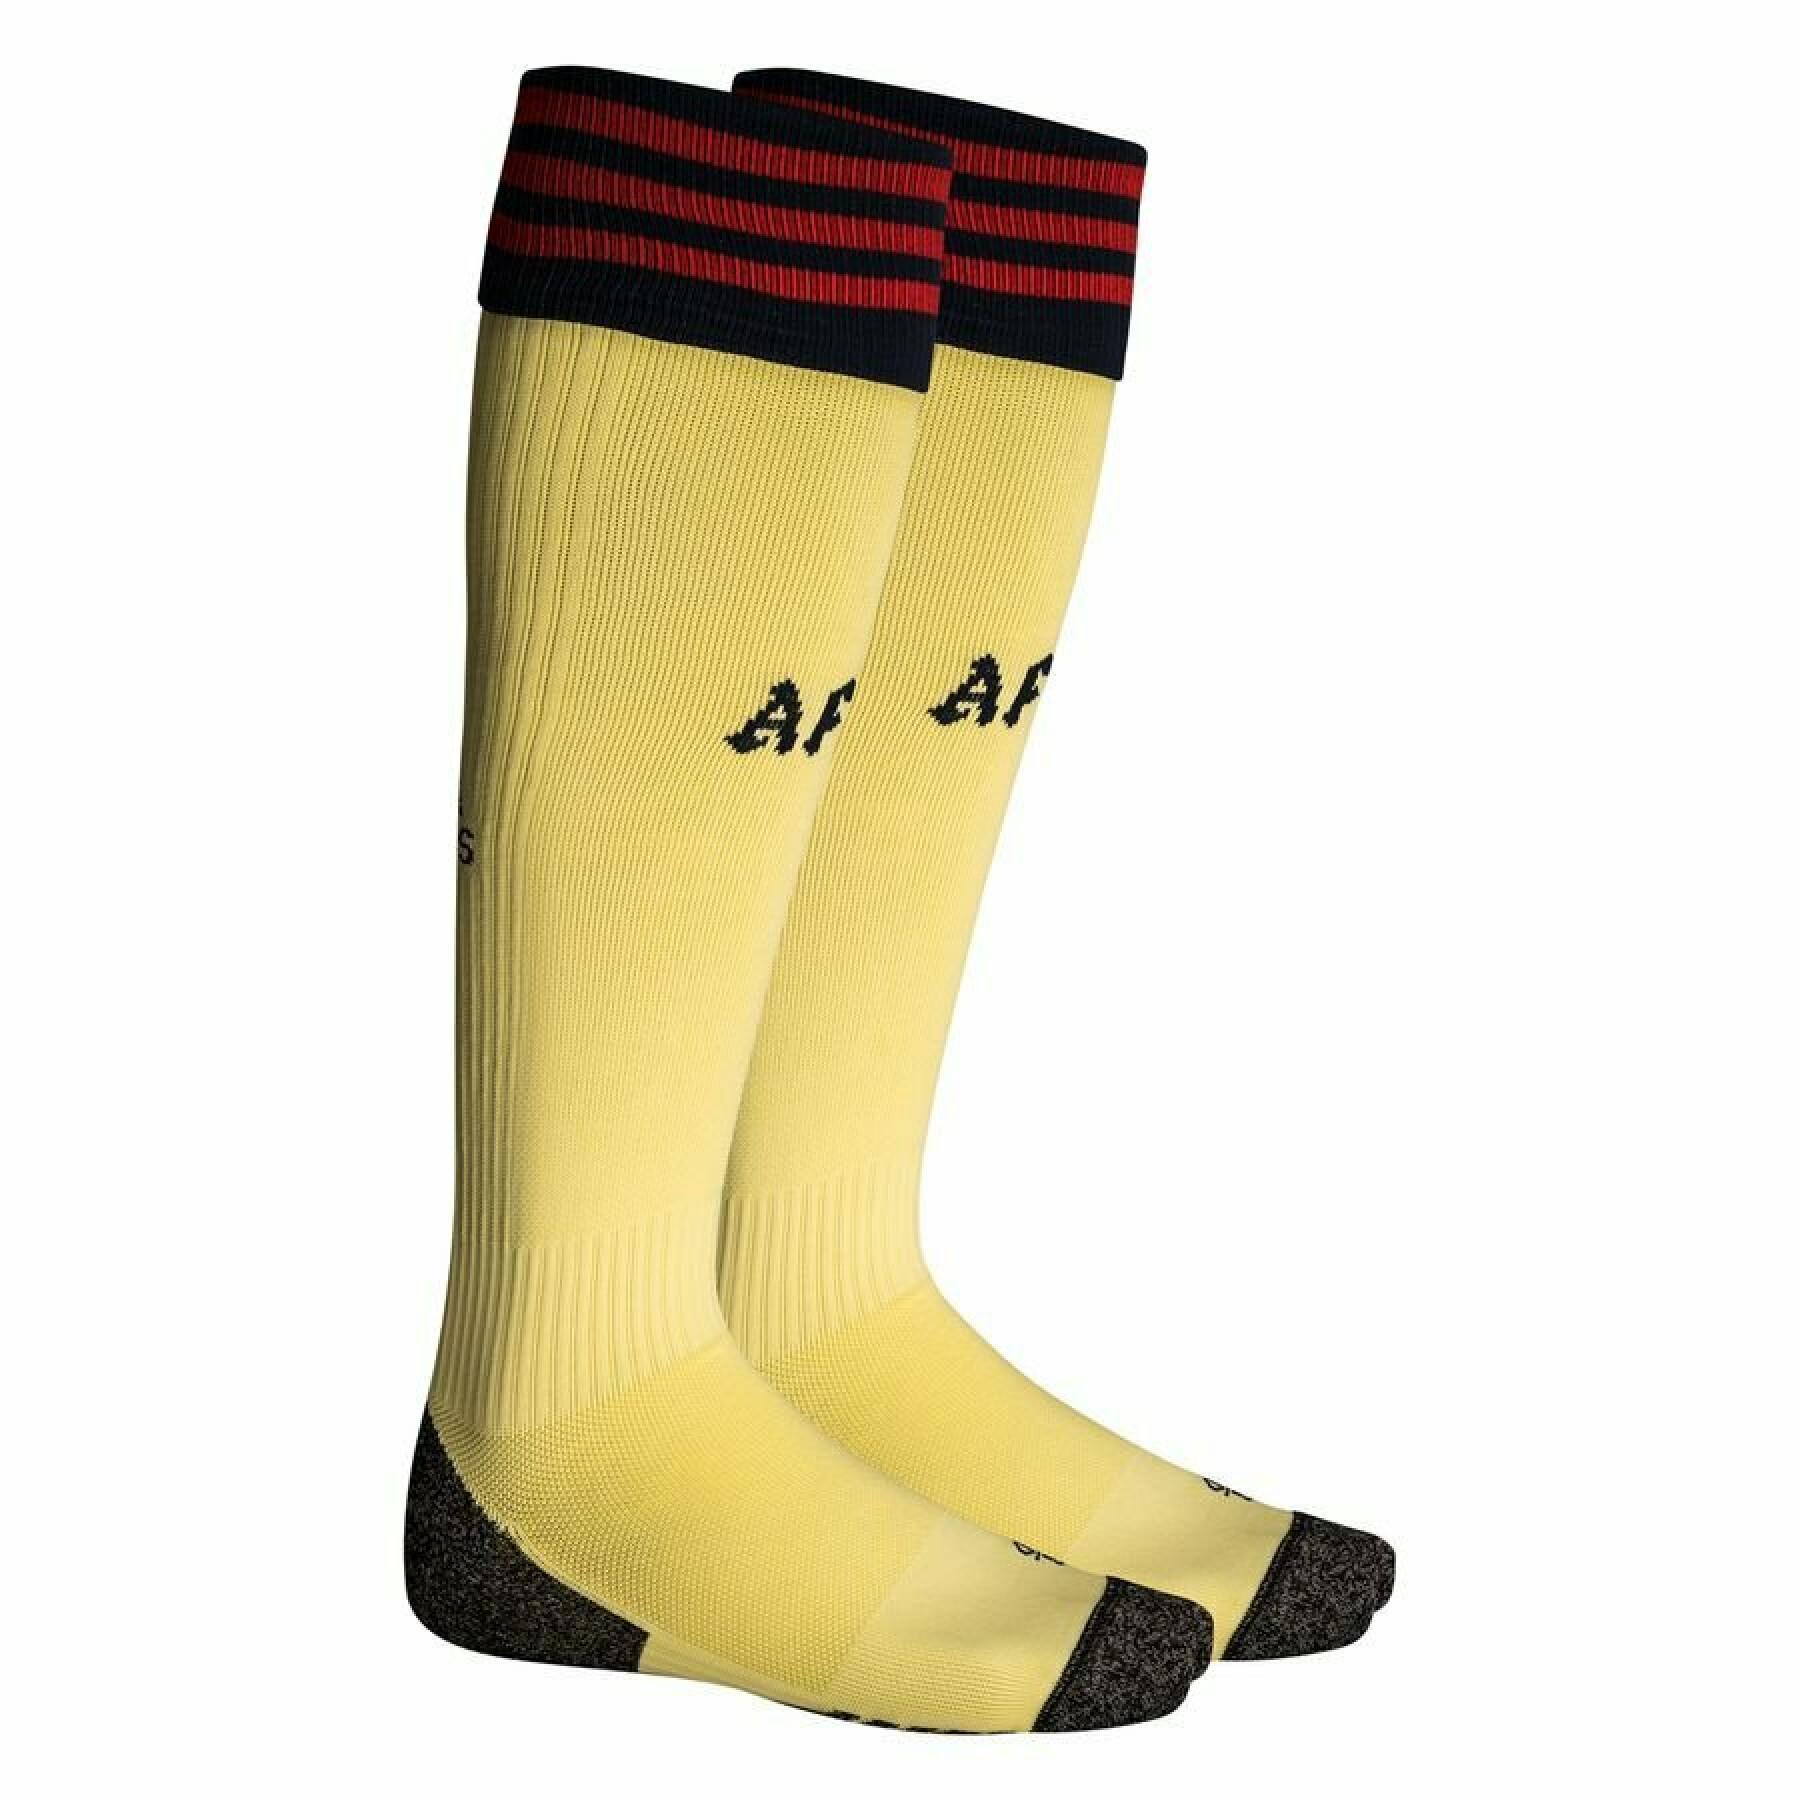 Outdoor socks Arsenal 2021/22